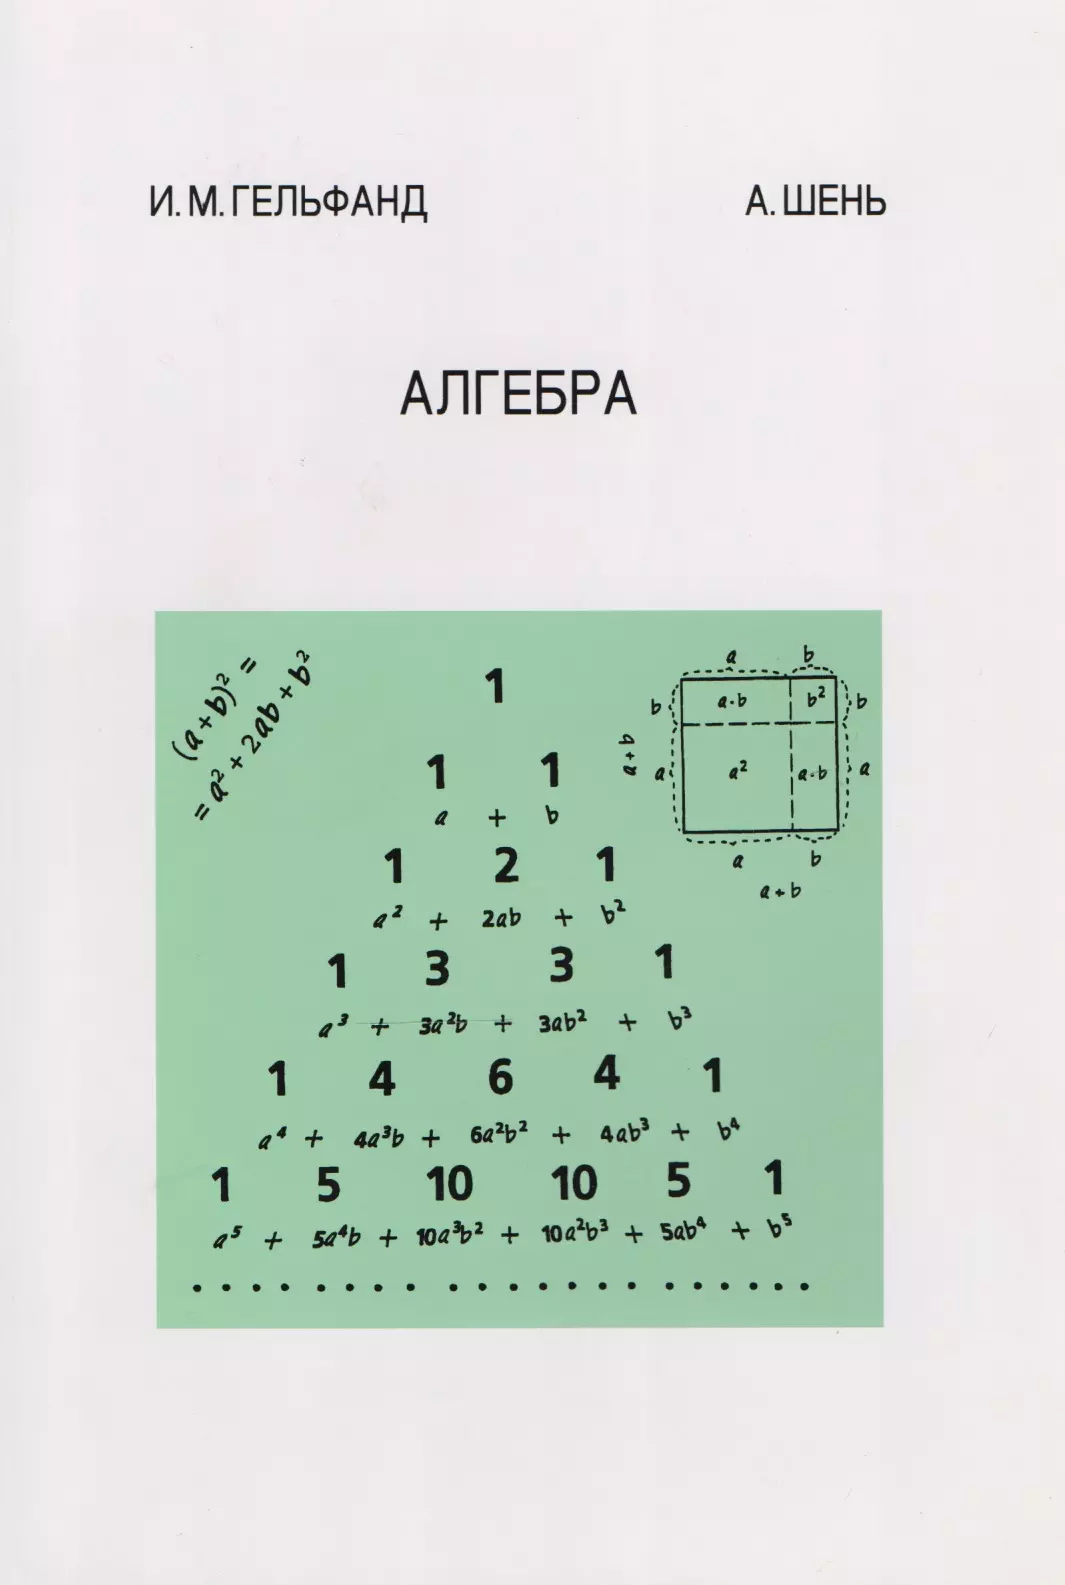 Шень Александр Ханьевич, Гельфанд Израиль Моисеевич - Алгебра. 4-е издание, стереотипное